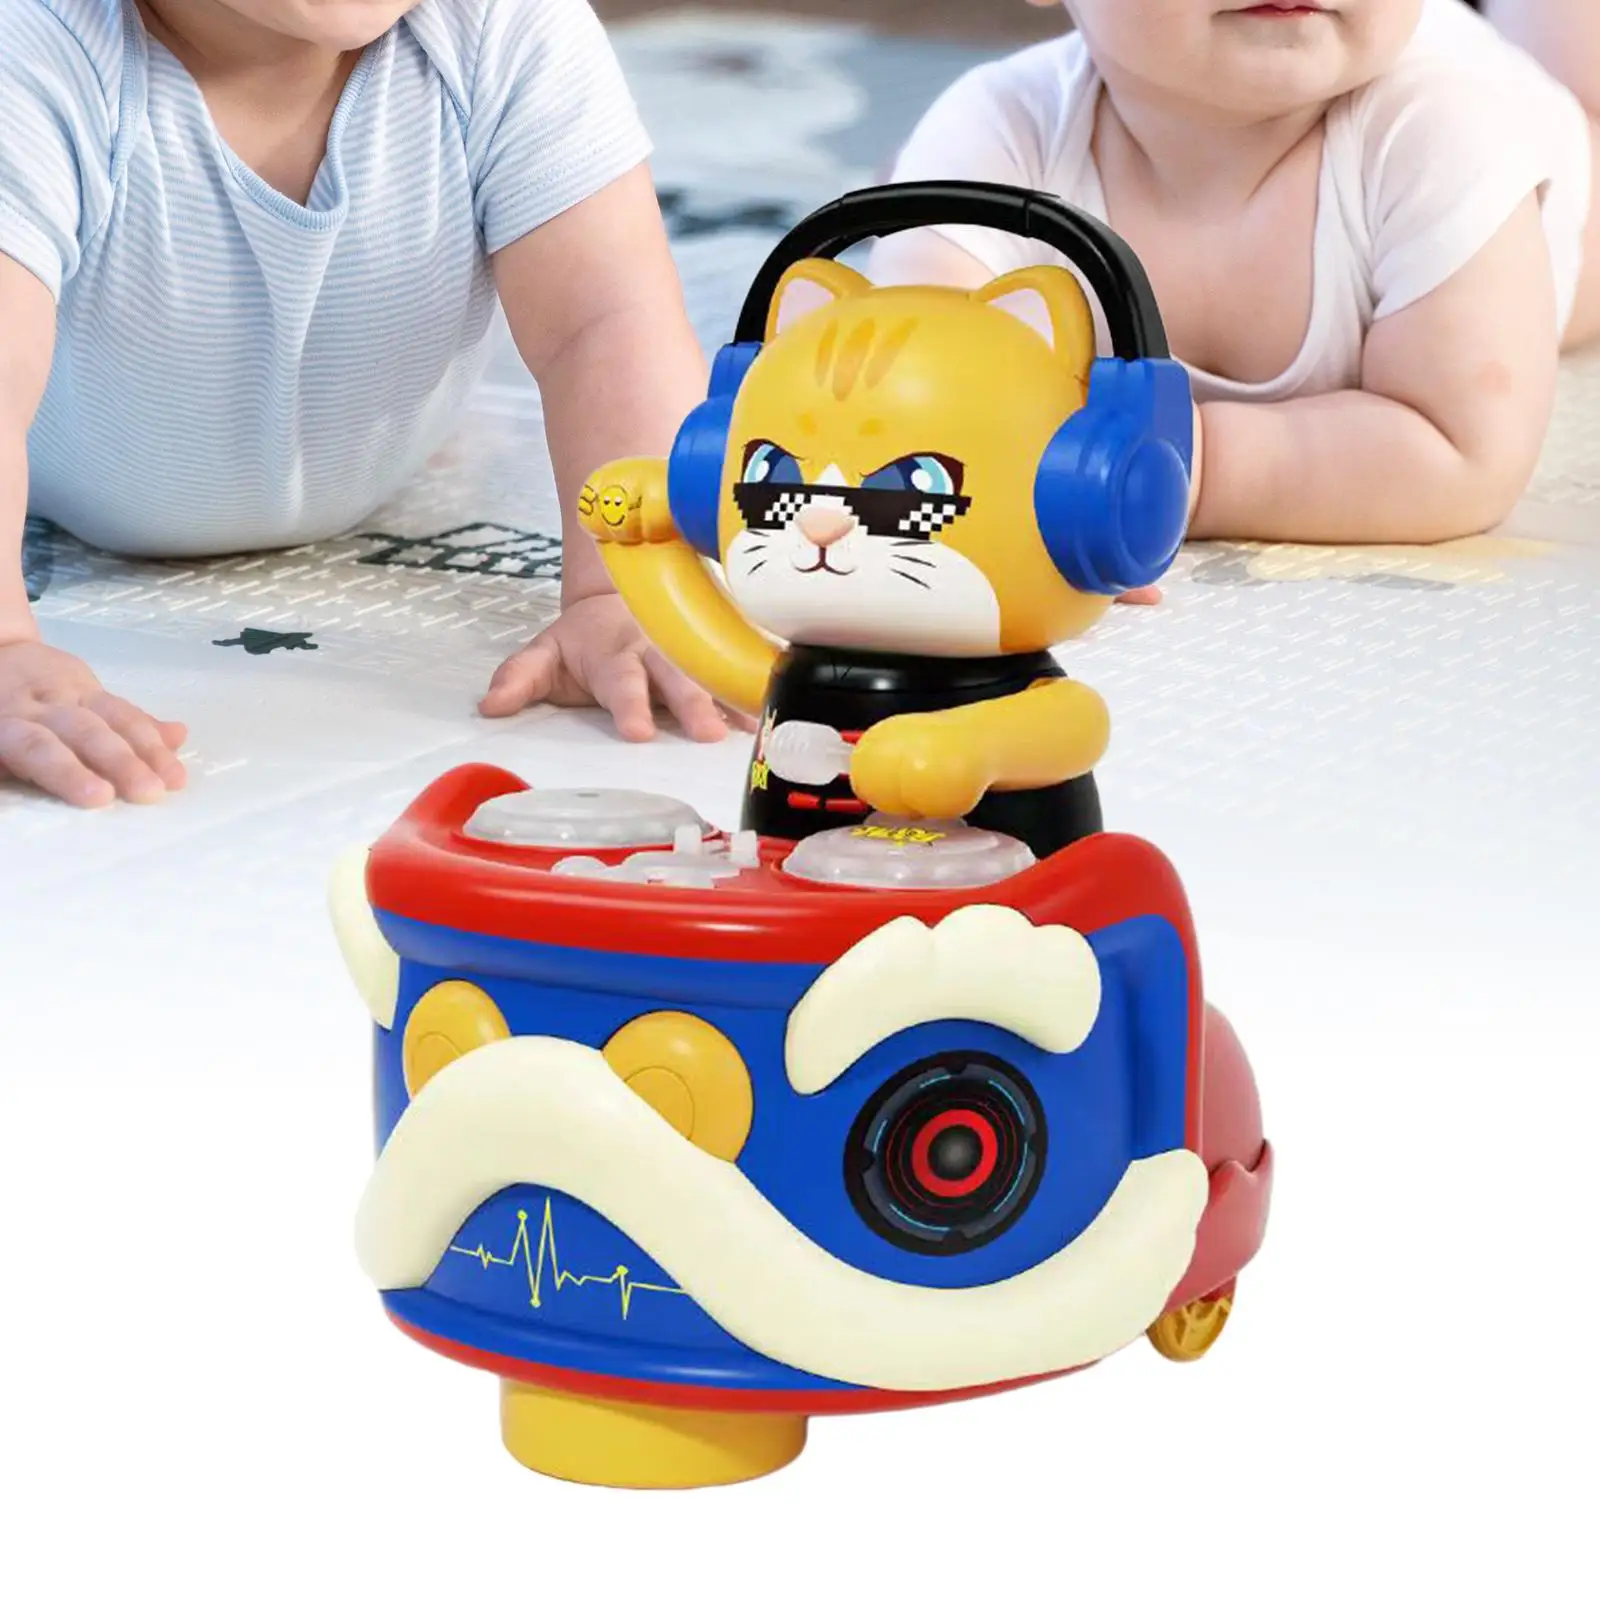 Dancing Cat Electronic Pet Robot Interaction Toy Baby Toy Sensory for Entertainment Child Kindergarten Preschool Birthday Gift